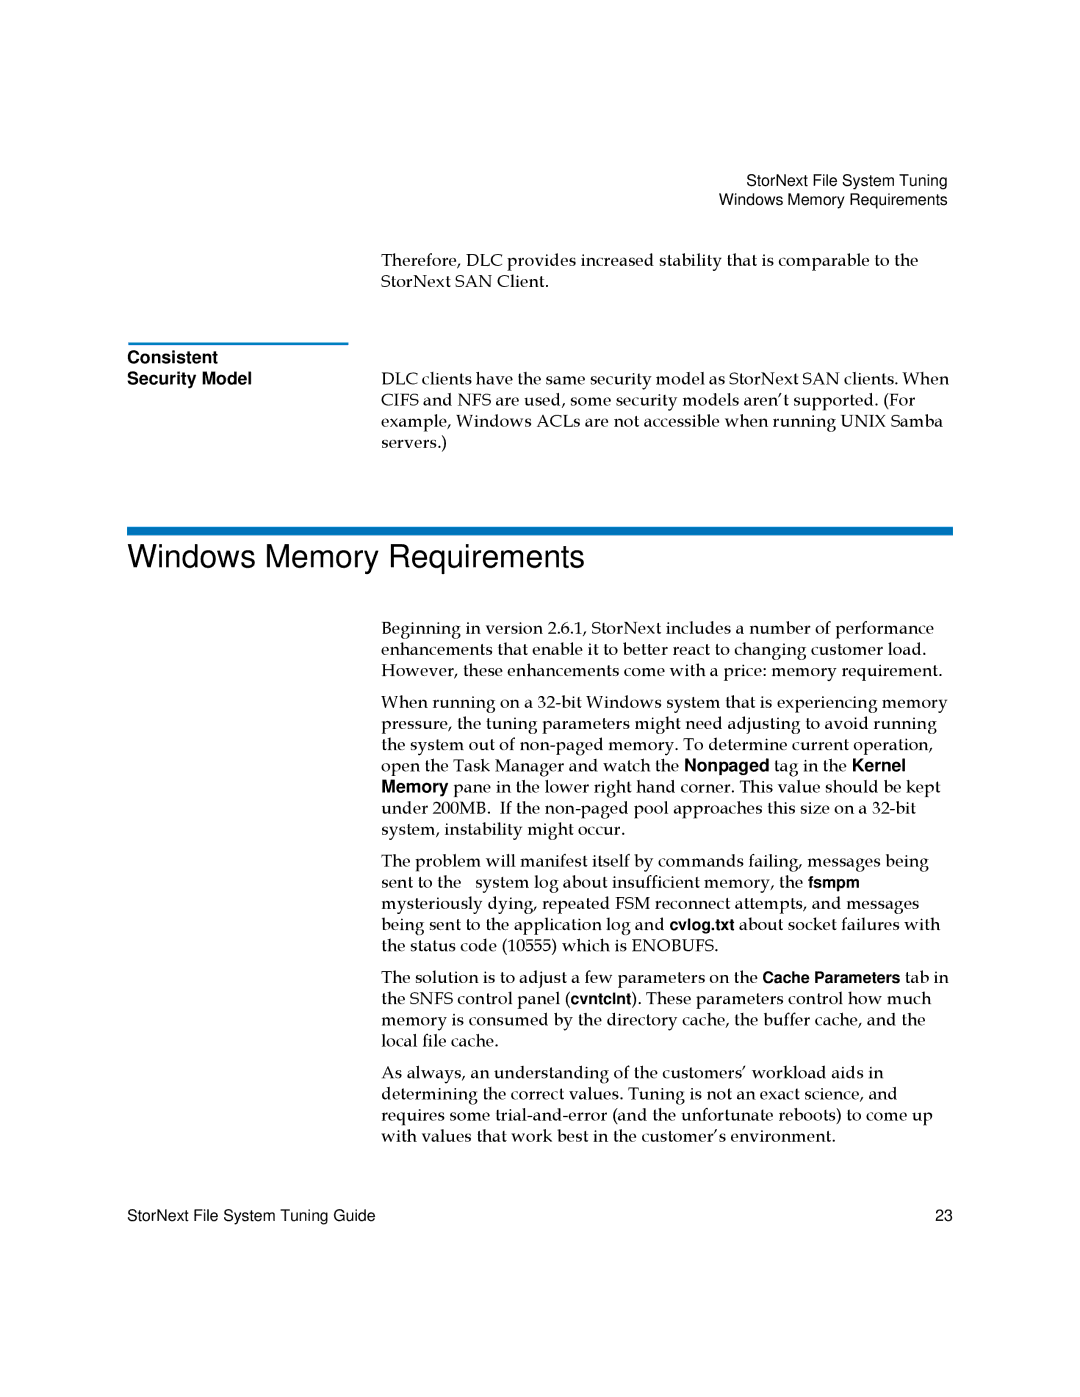 Quantum 6-01376-07 manual Windows Memory Requirements, Consistent 